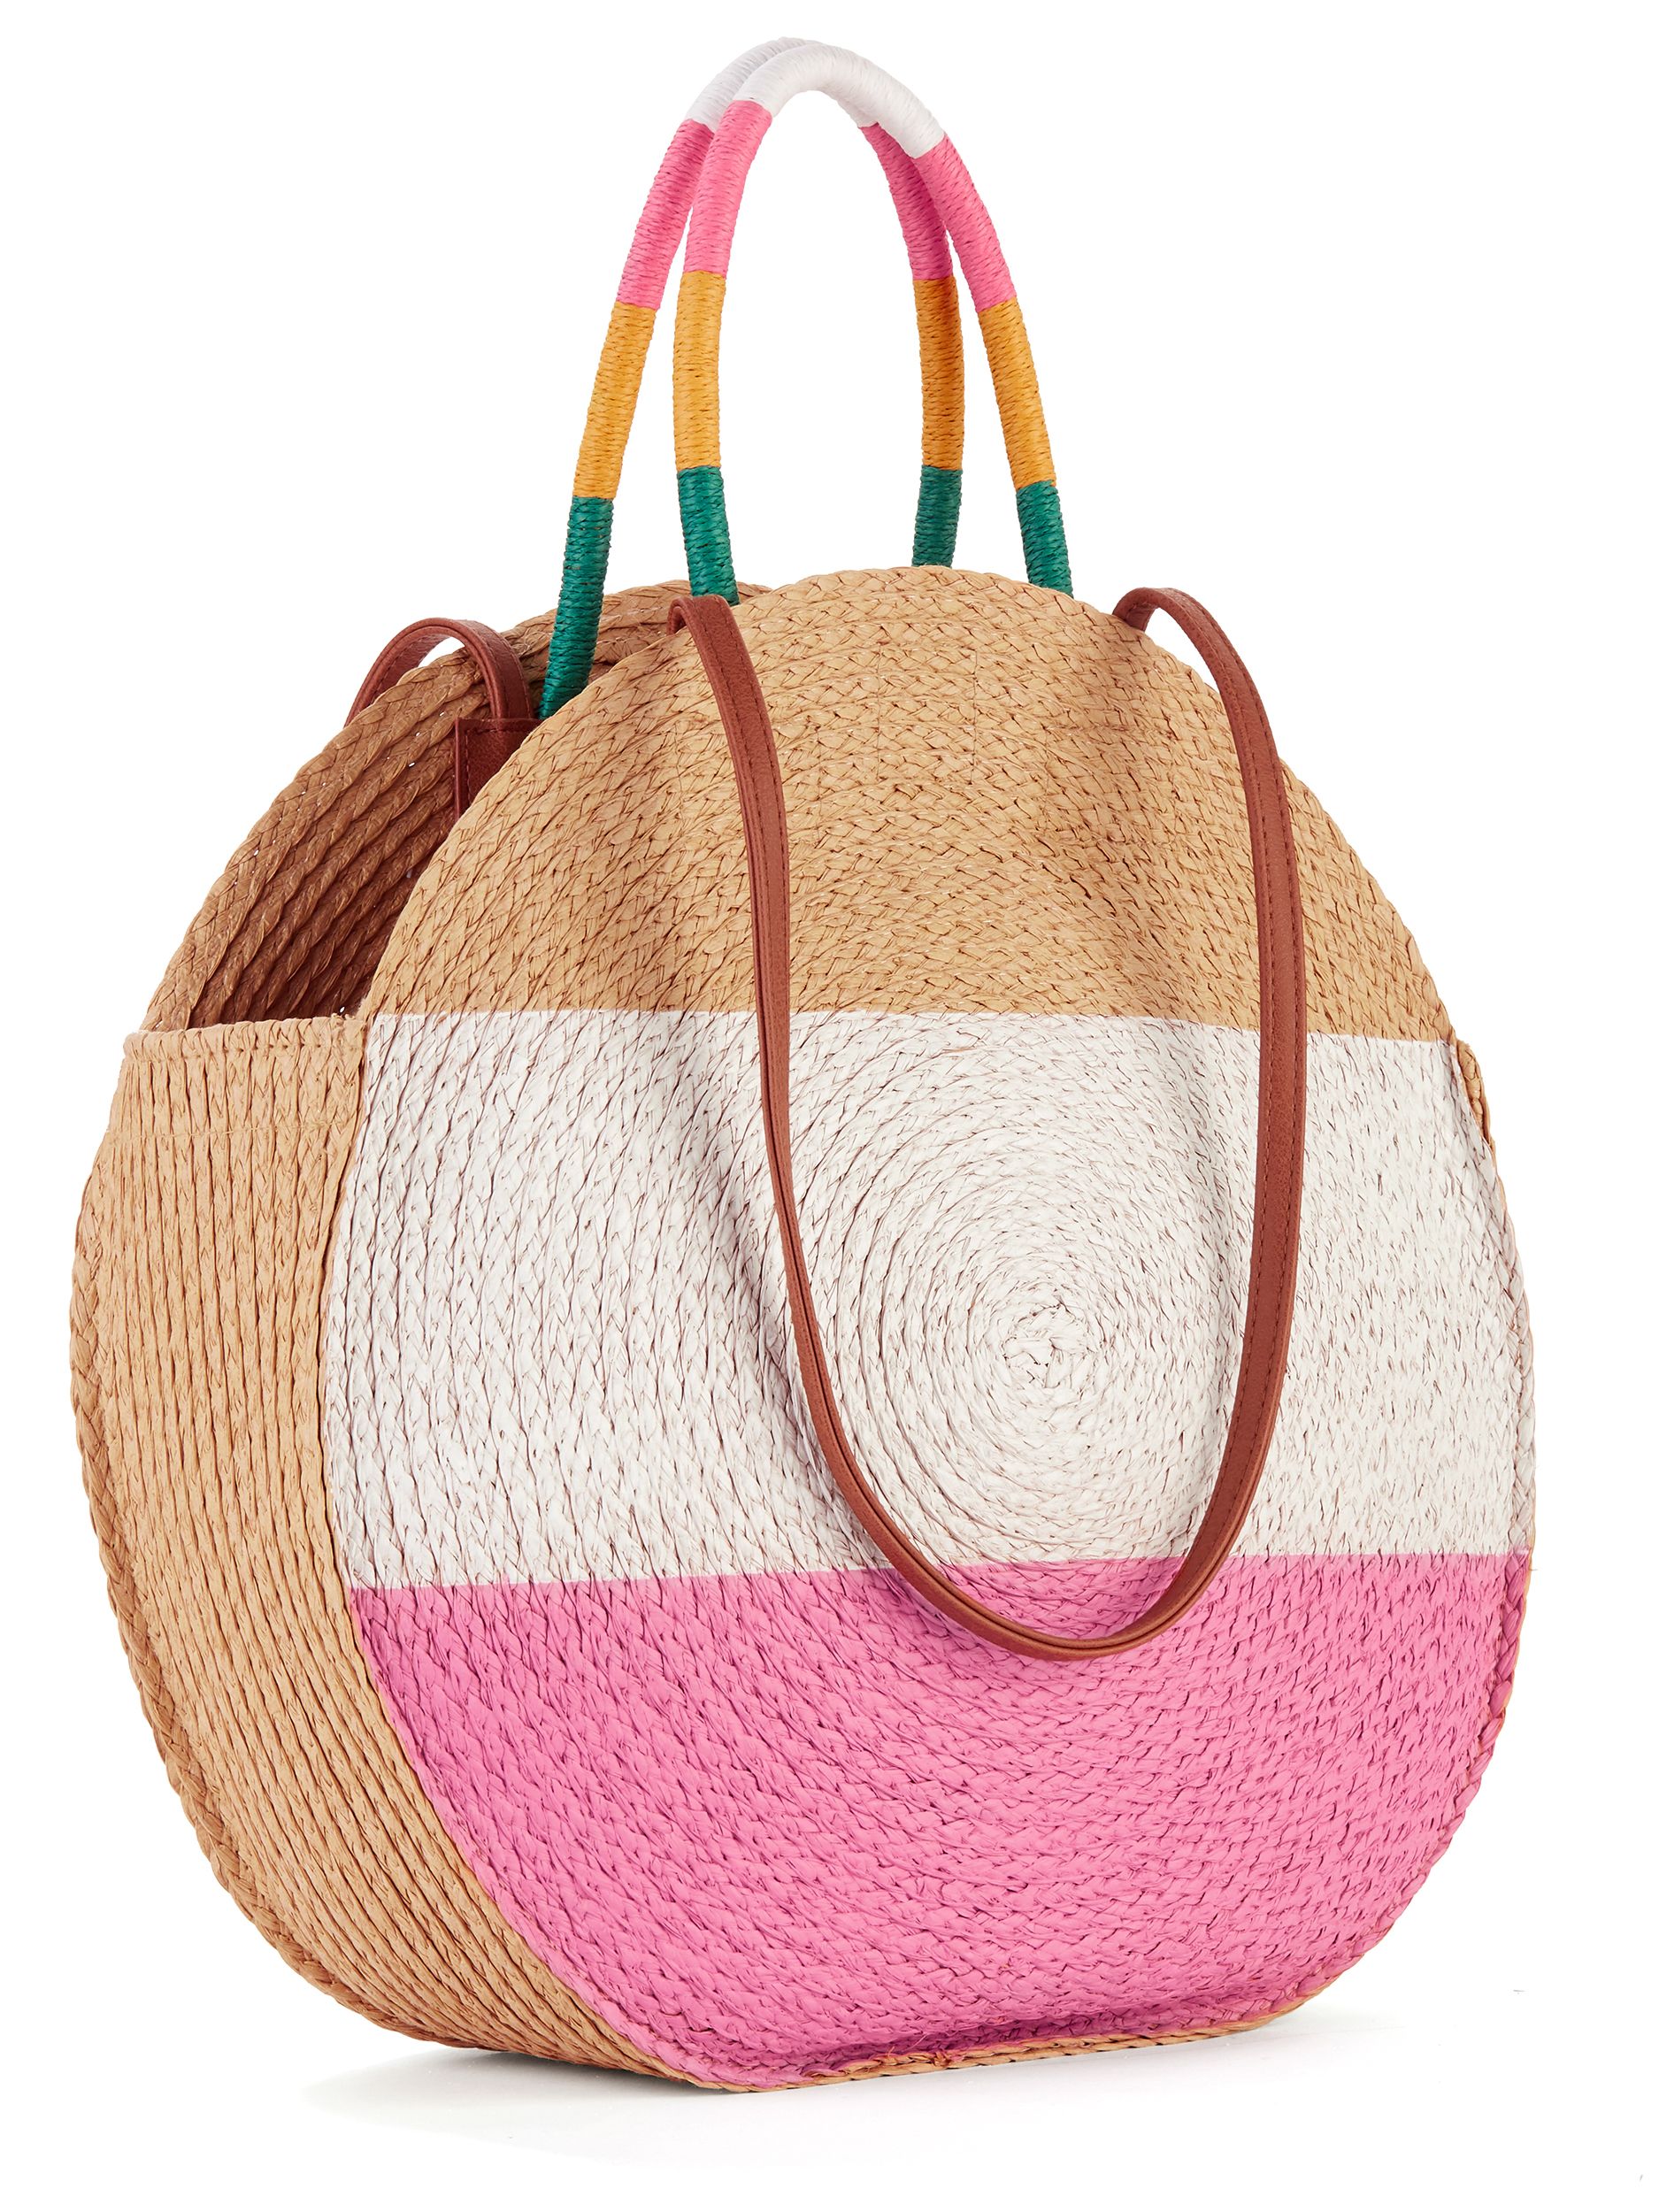 Bag tobed; beach bag; basket; cabas; beach toss; handbag; race toss